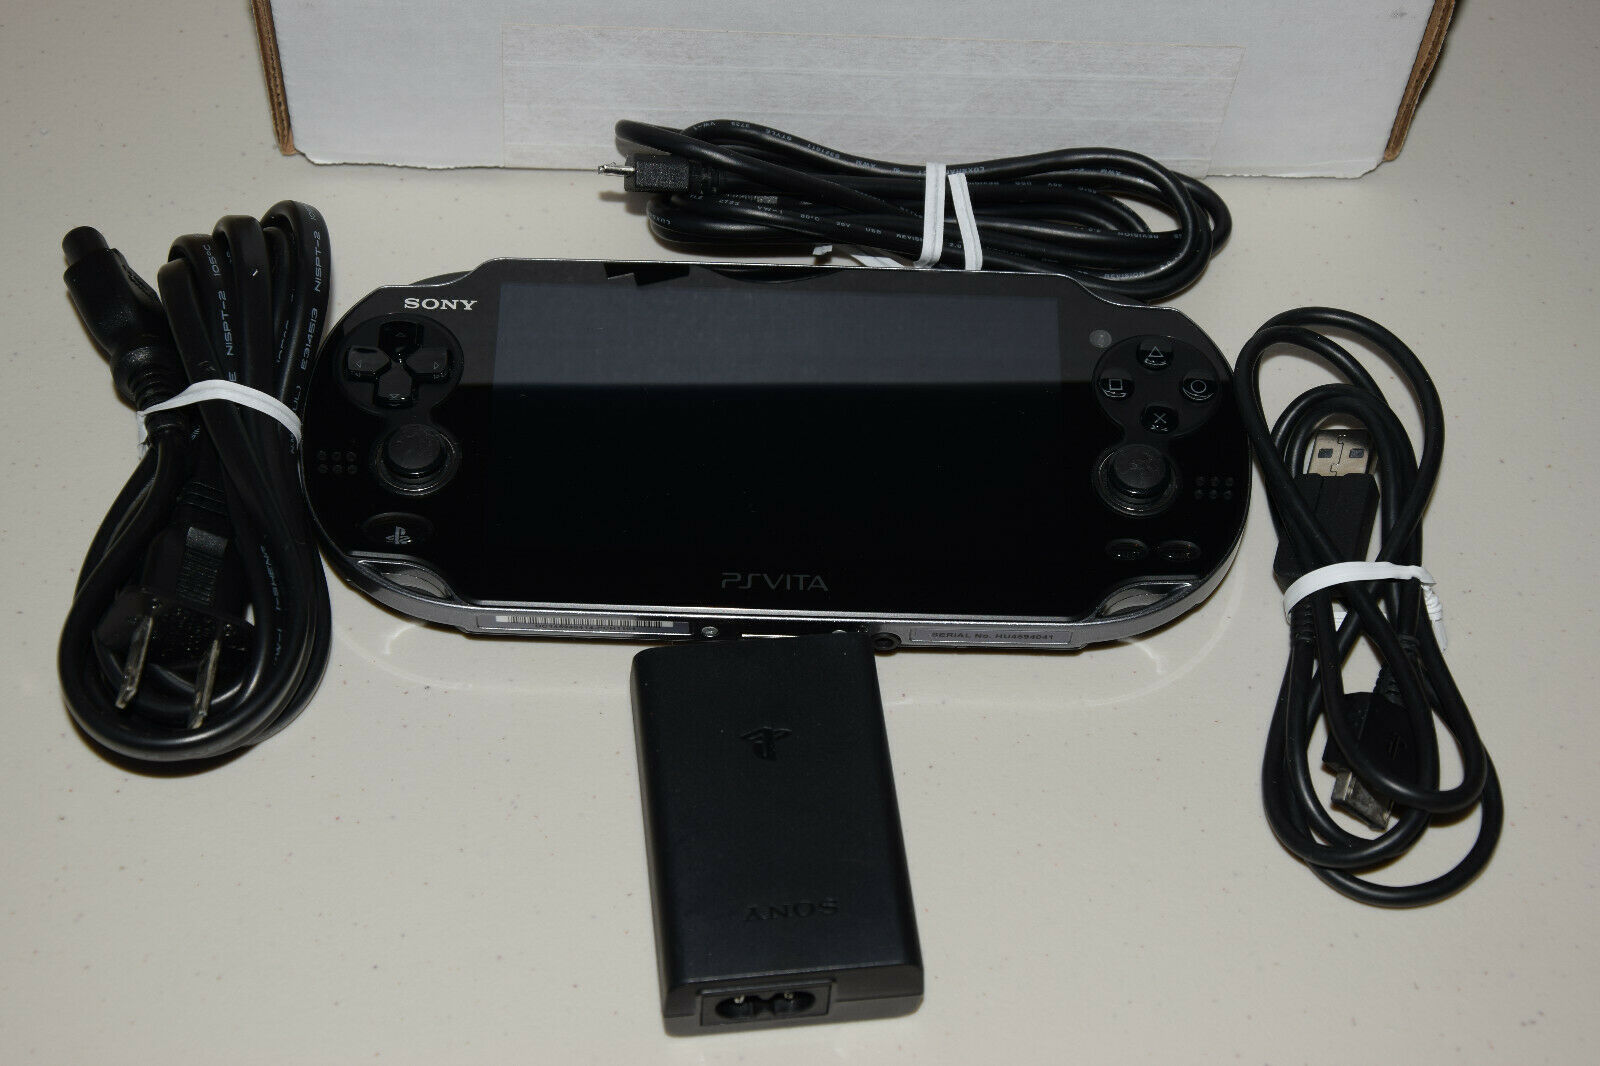 Sony PlayStation PS Vita 3G/Wi-Fi Crystal and similar items